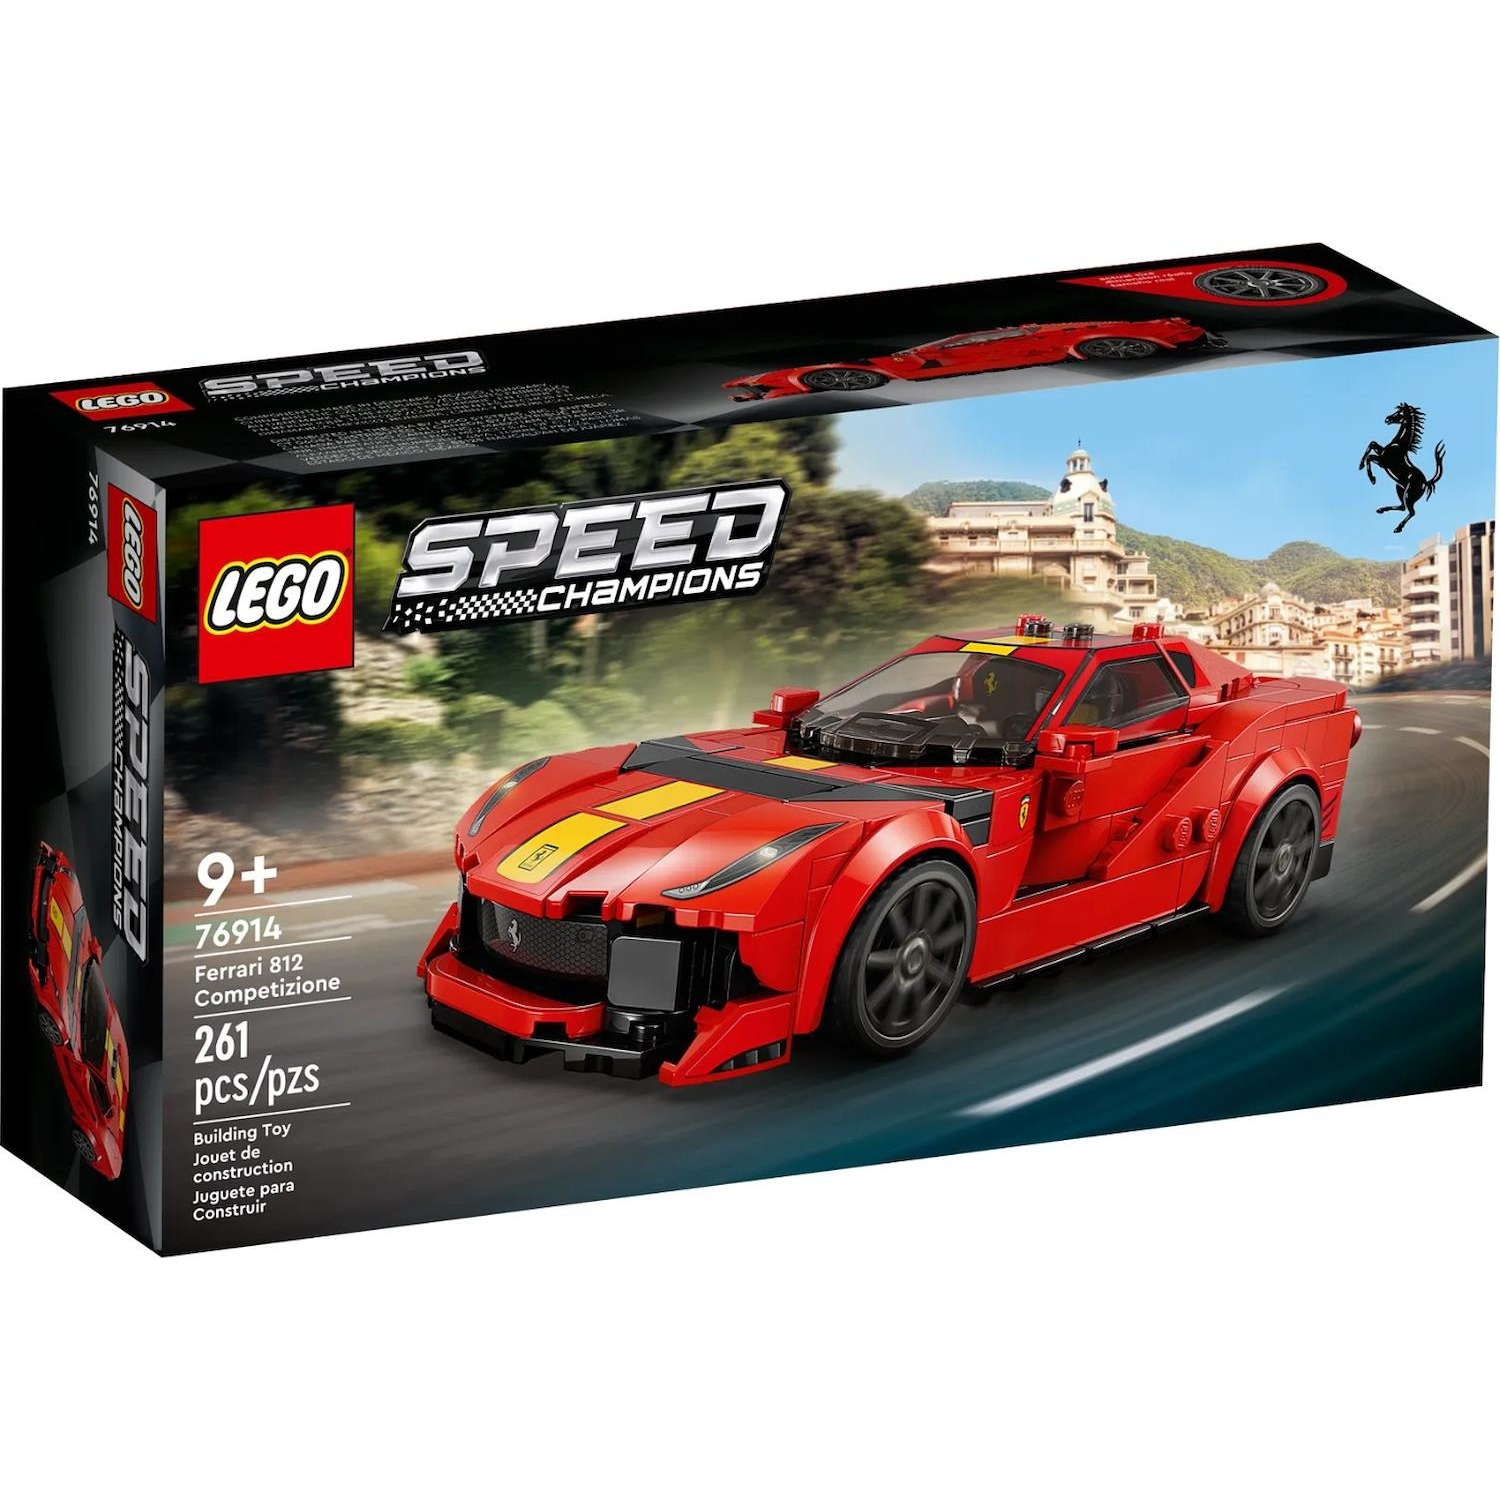 Immagine per Lego Speed Ferrari 812 Competizione da DIMOStore